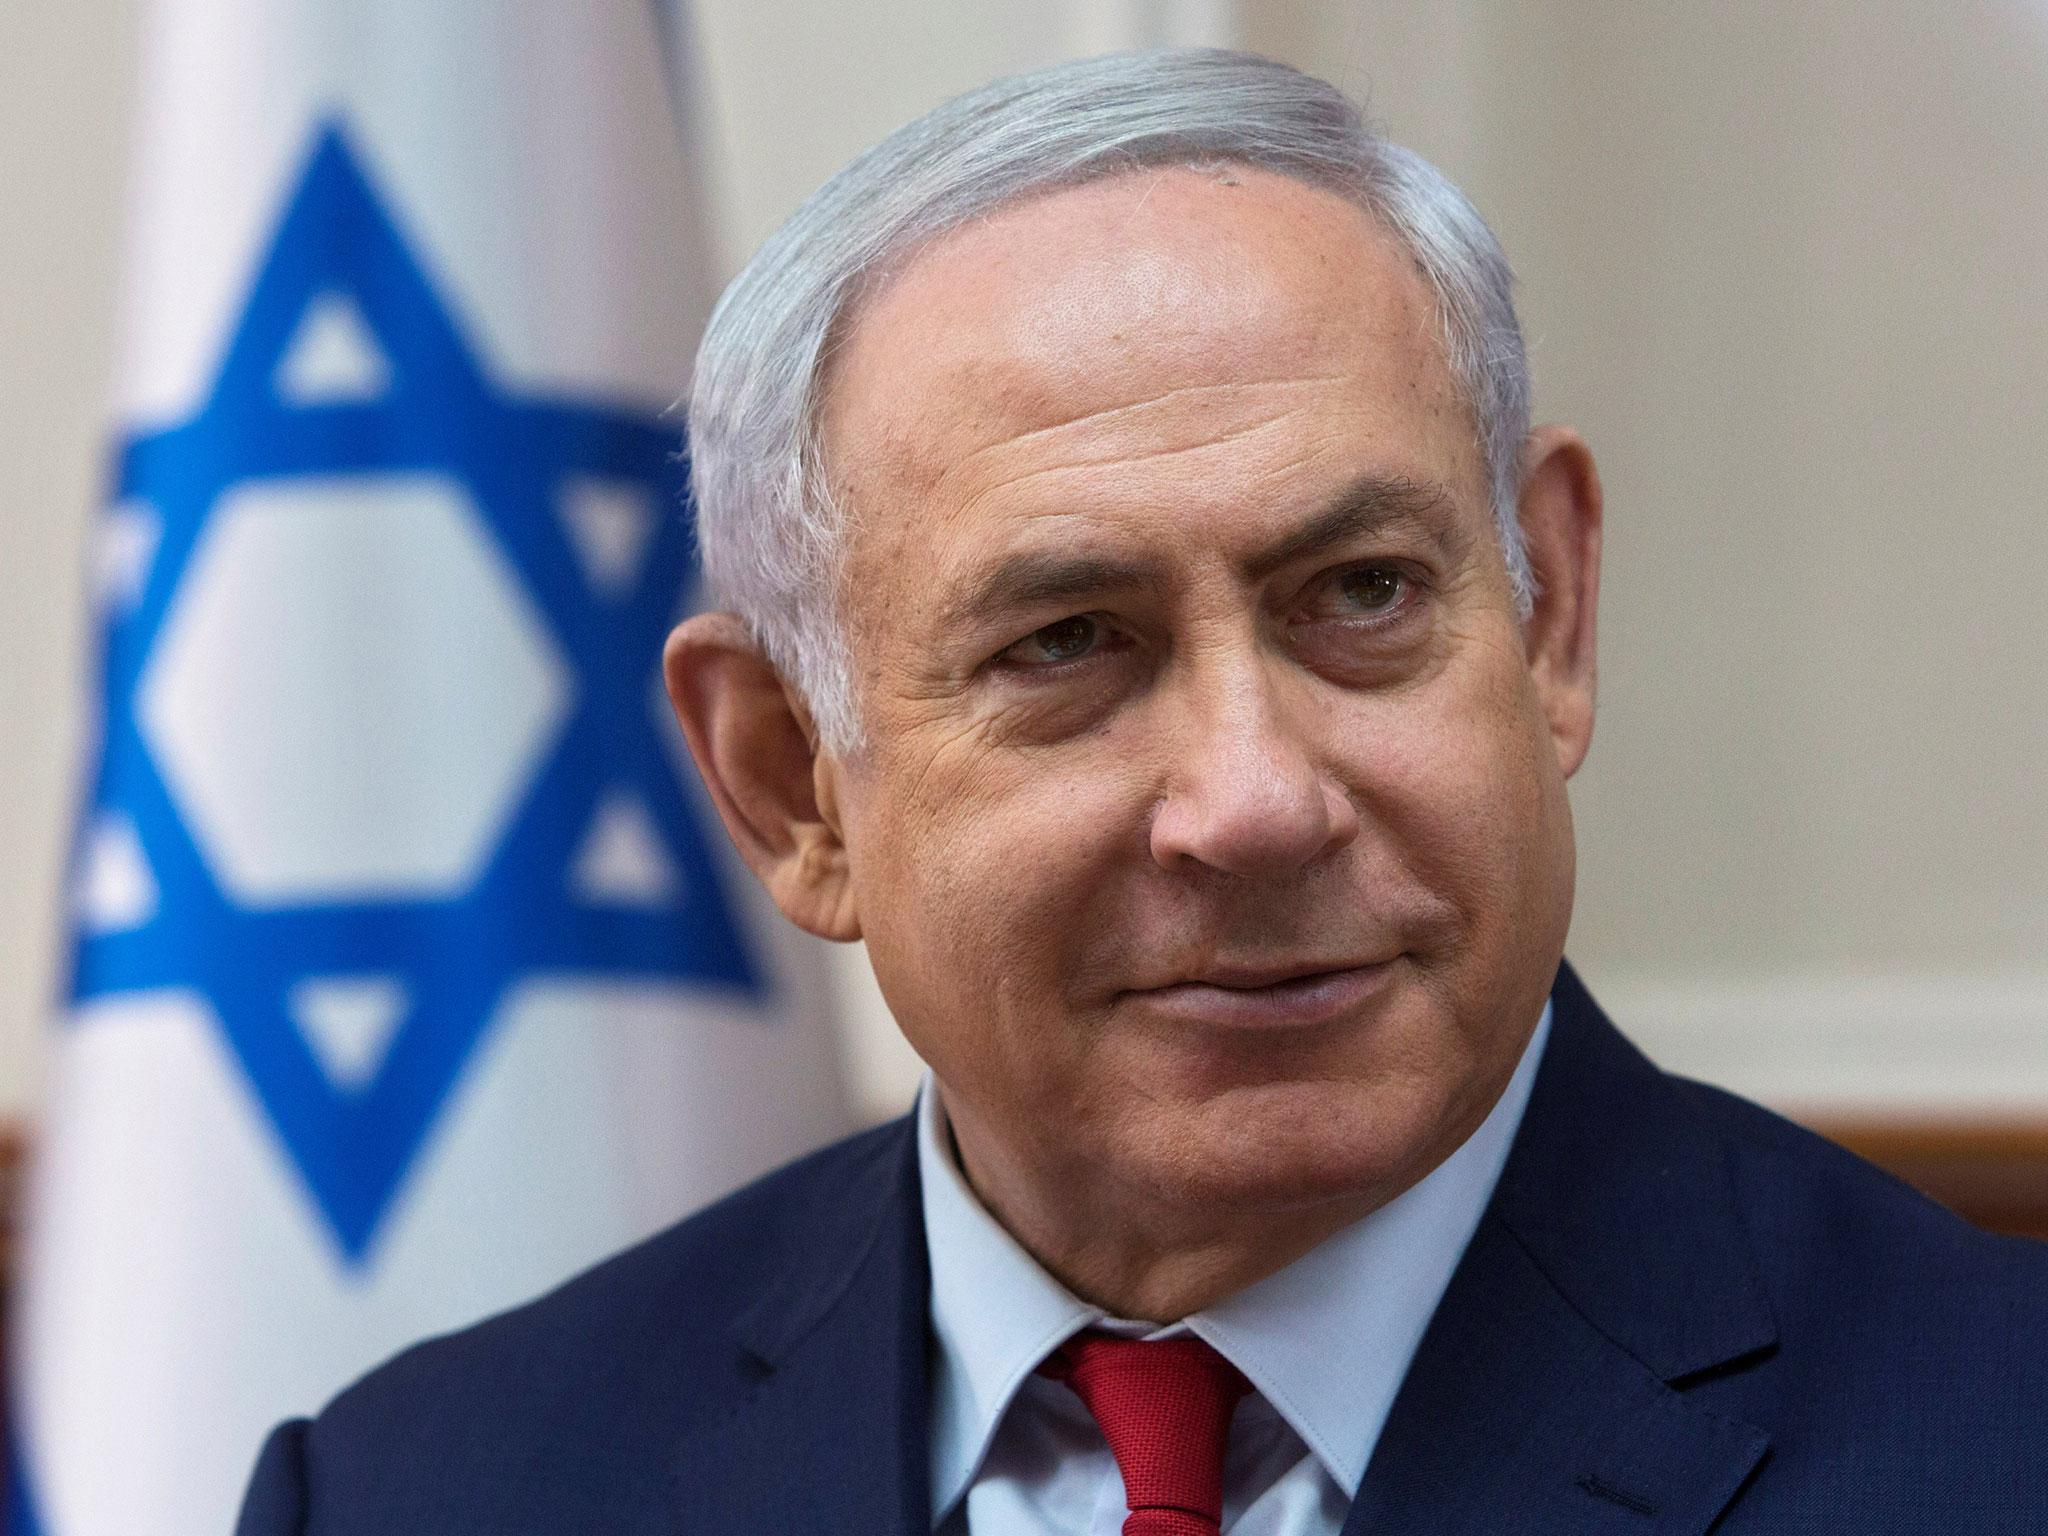 Benjamin Netanyahu, the Israeli Prime Minister